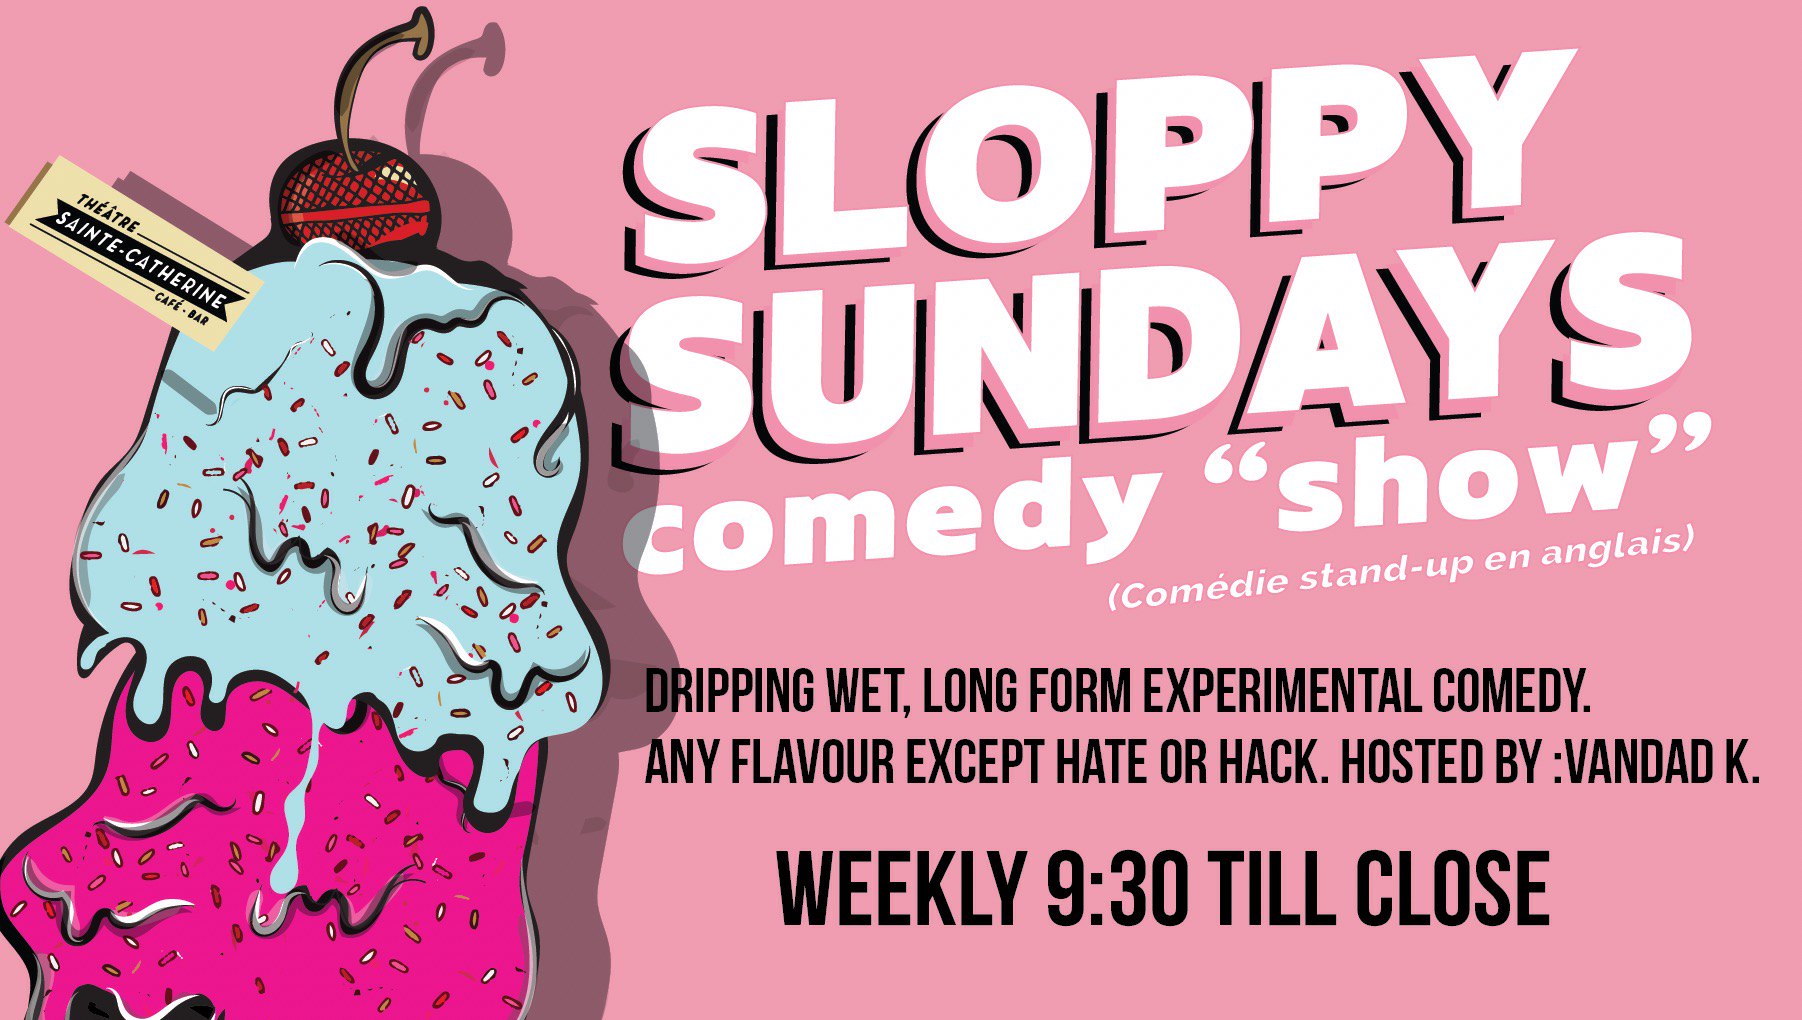 Sloppy Sundays Comedy “Show”